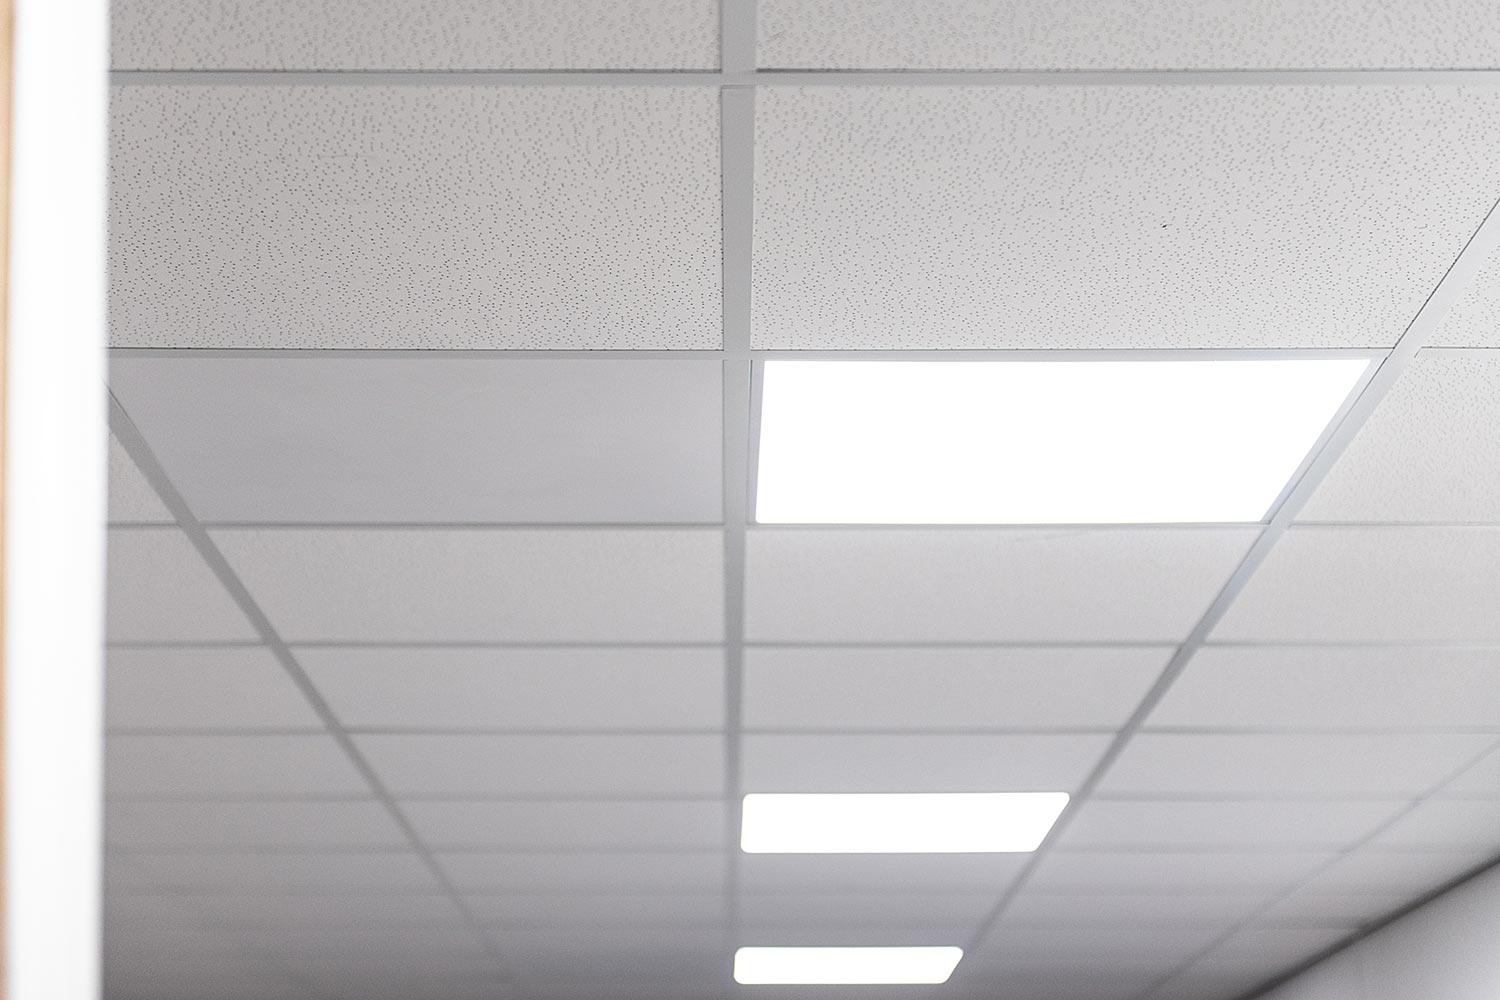 LED-verlichting